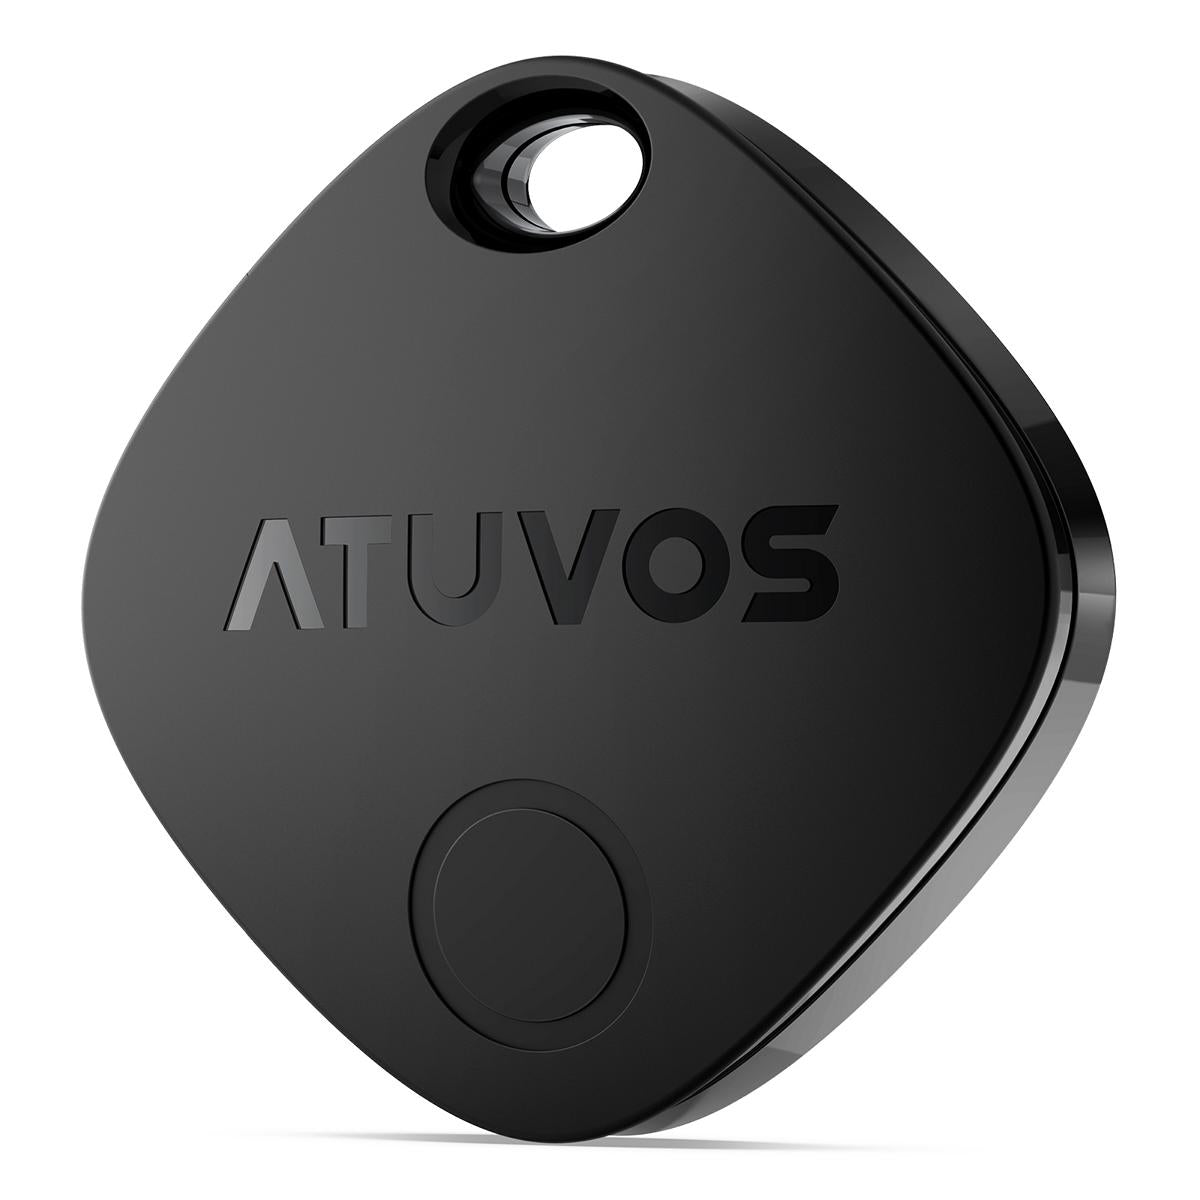 ATUVOS Black Versatile Tracker 1 PCS (Not Available in AUS and JPN)